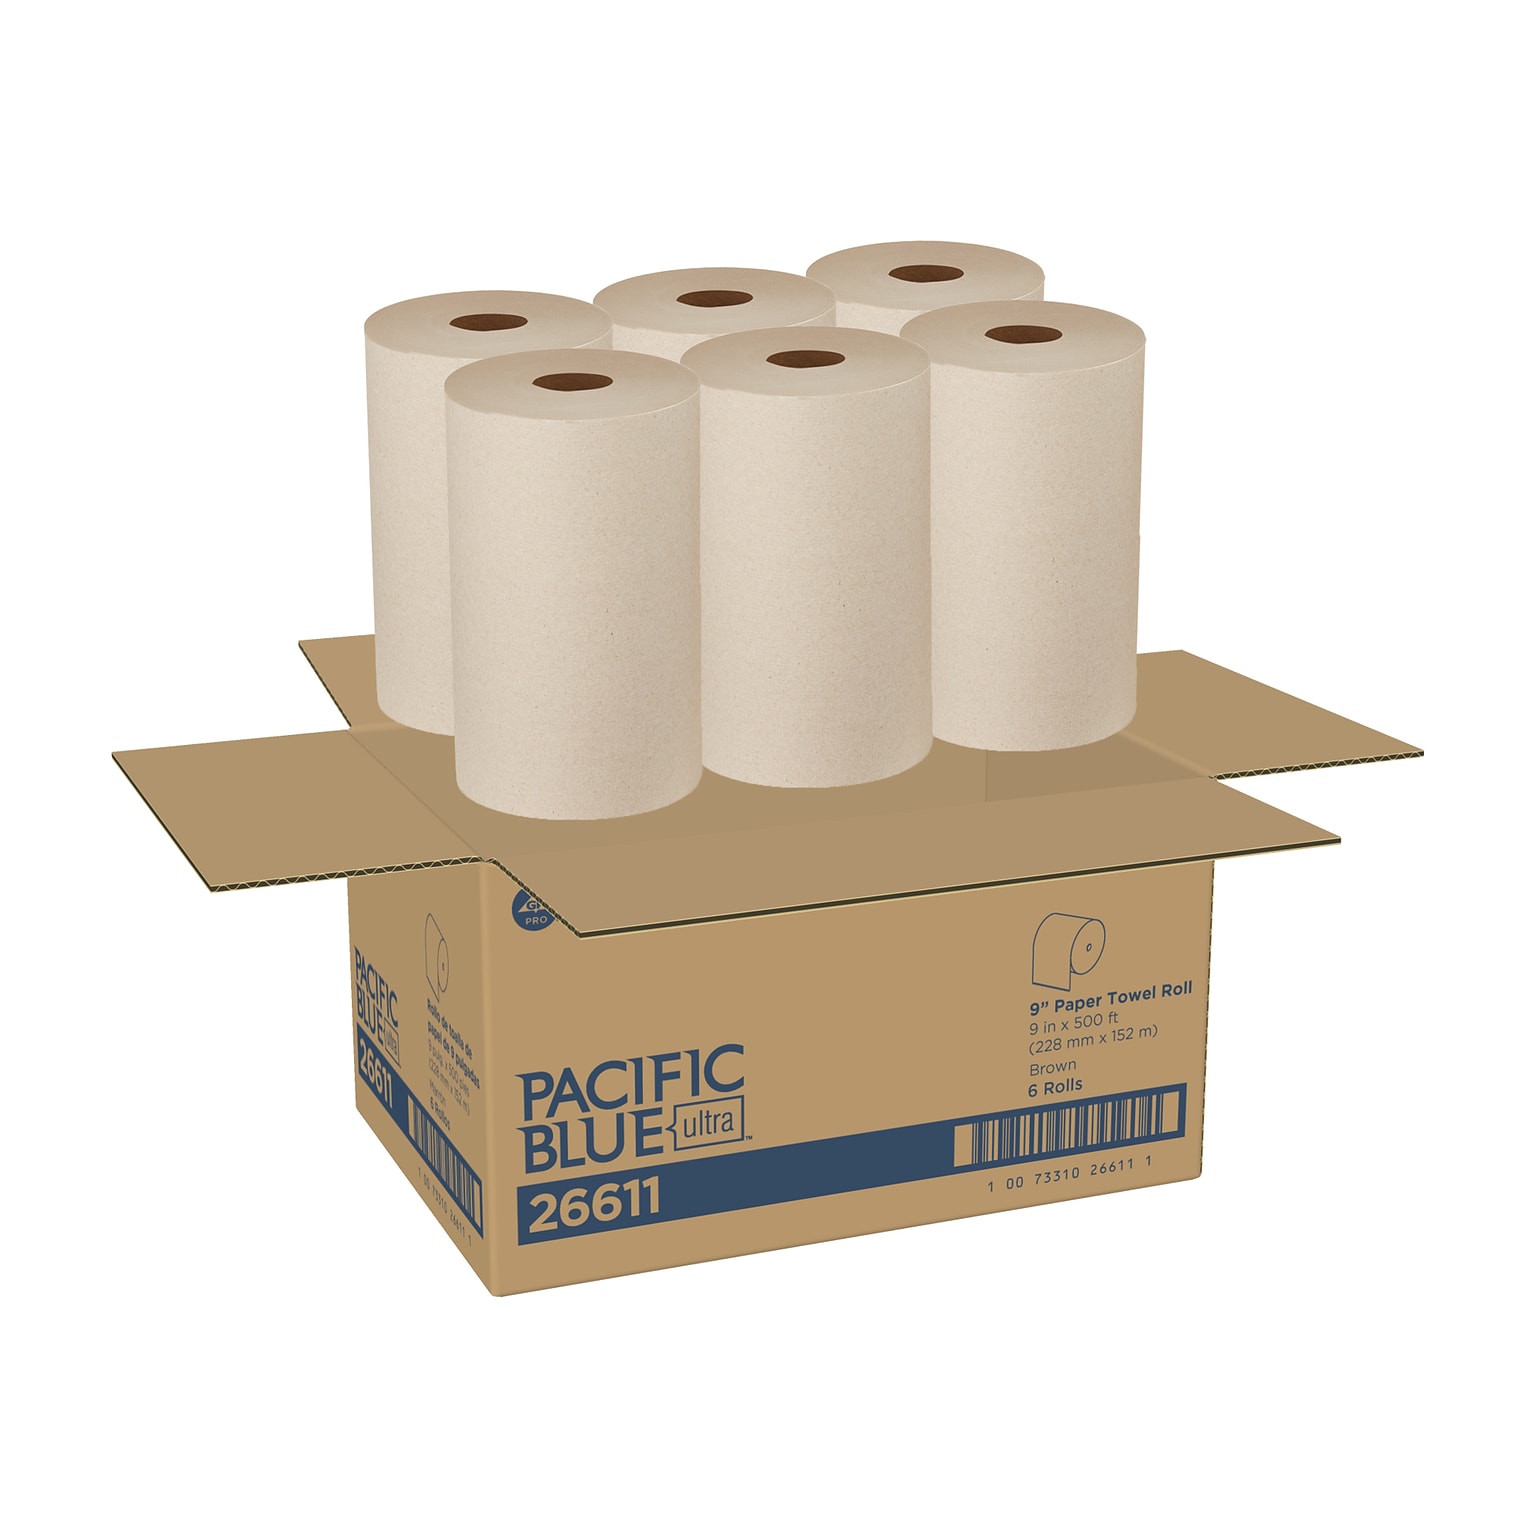 Georgia Pacific Blue Ultra 9 Paper Towel Roll, Brown, 6/Carton (26611)